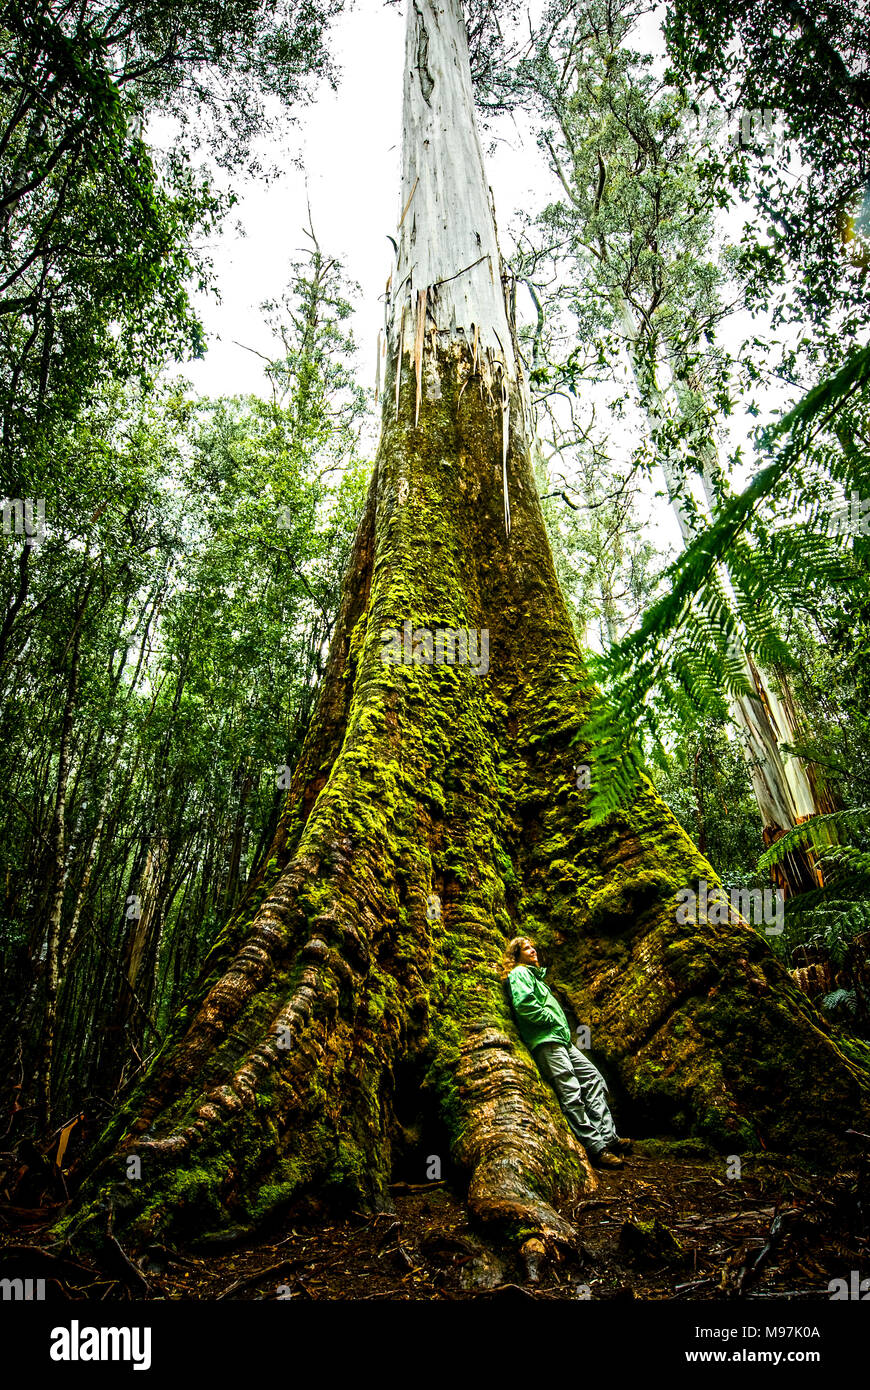 Australien, Tasmanien, Bäume, Baumriesen, Laubbäume, Eucalipto, Pantano de las encías, Parque Nacional Monte Field Foto de stock